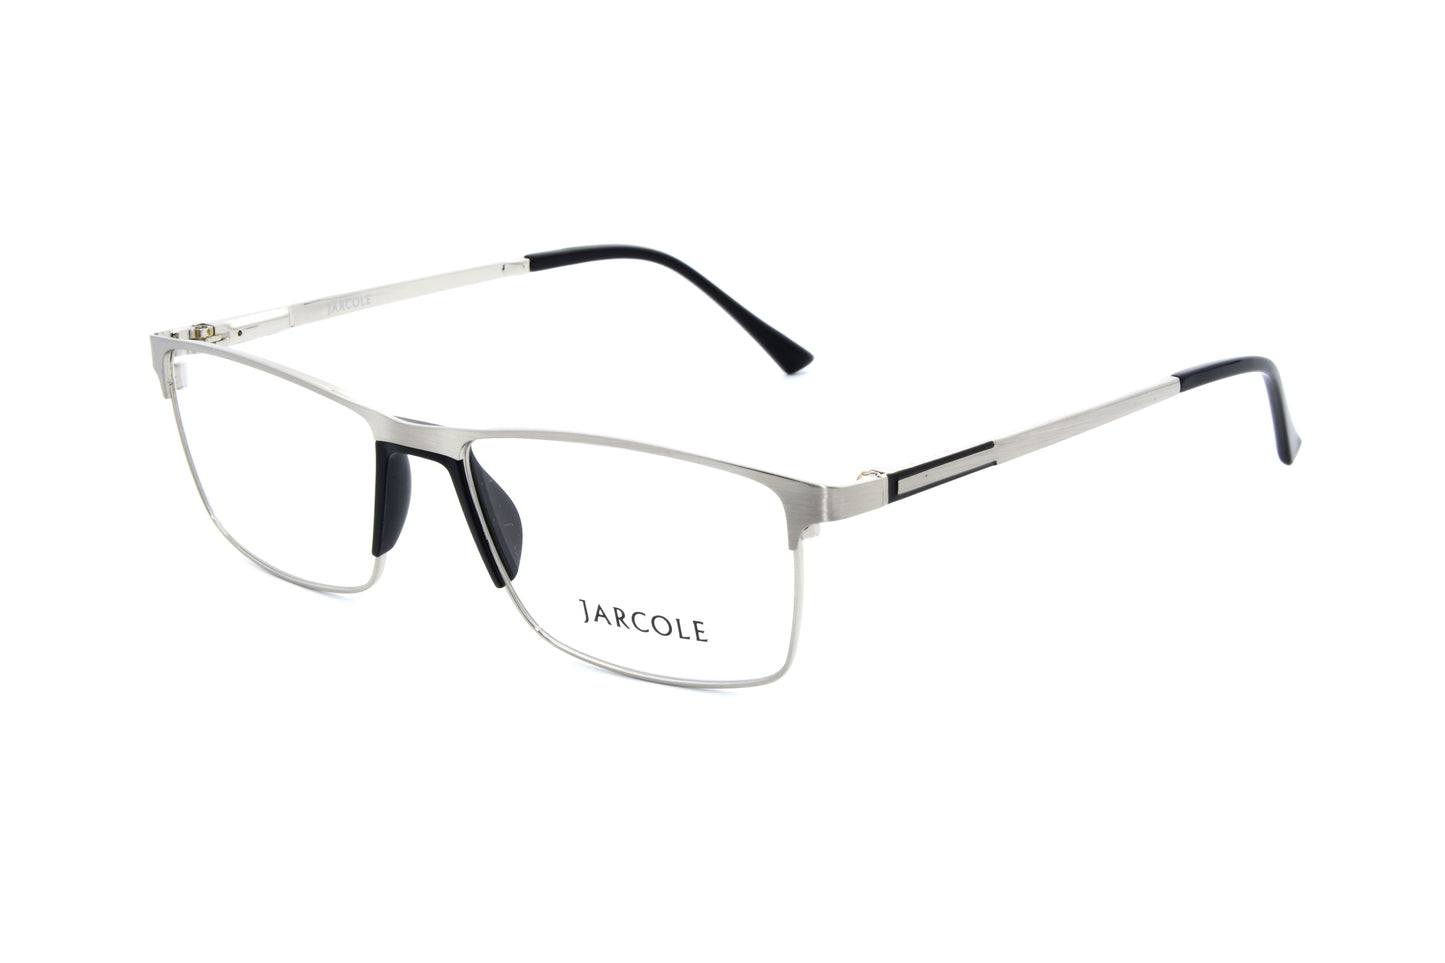 Jarcole eyewear 9037 C6